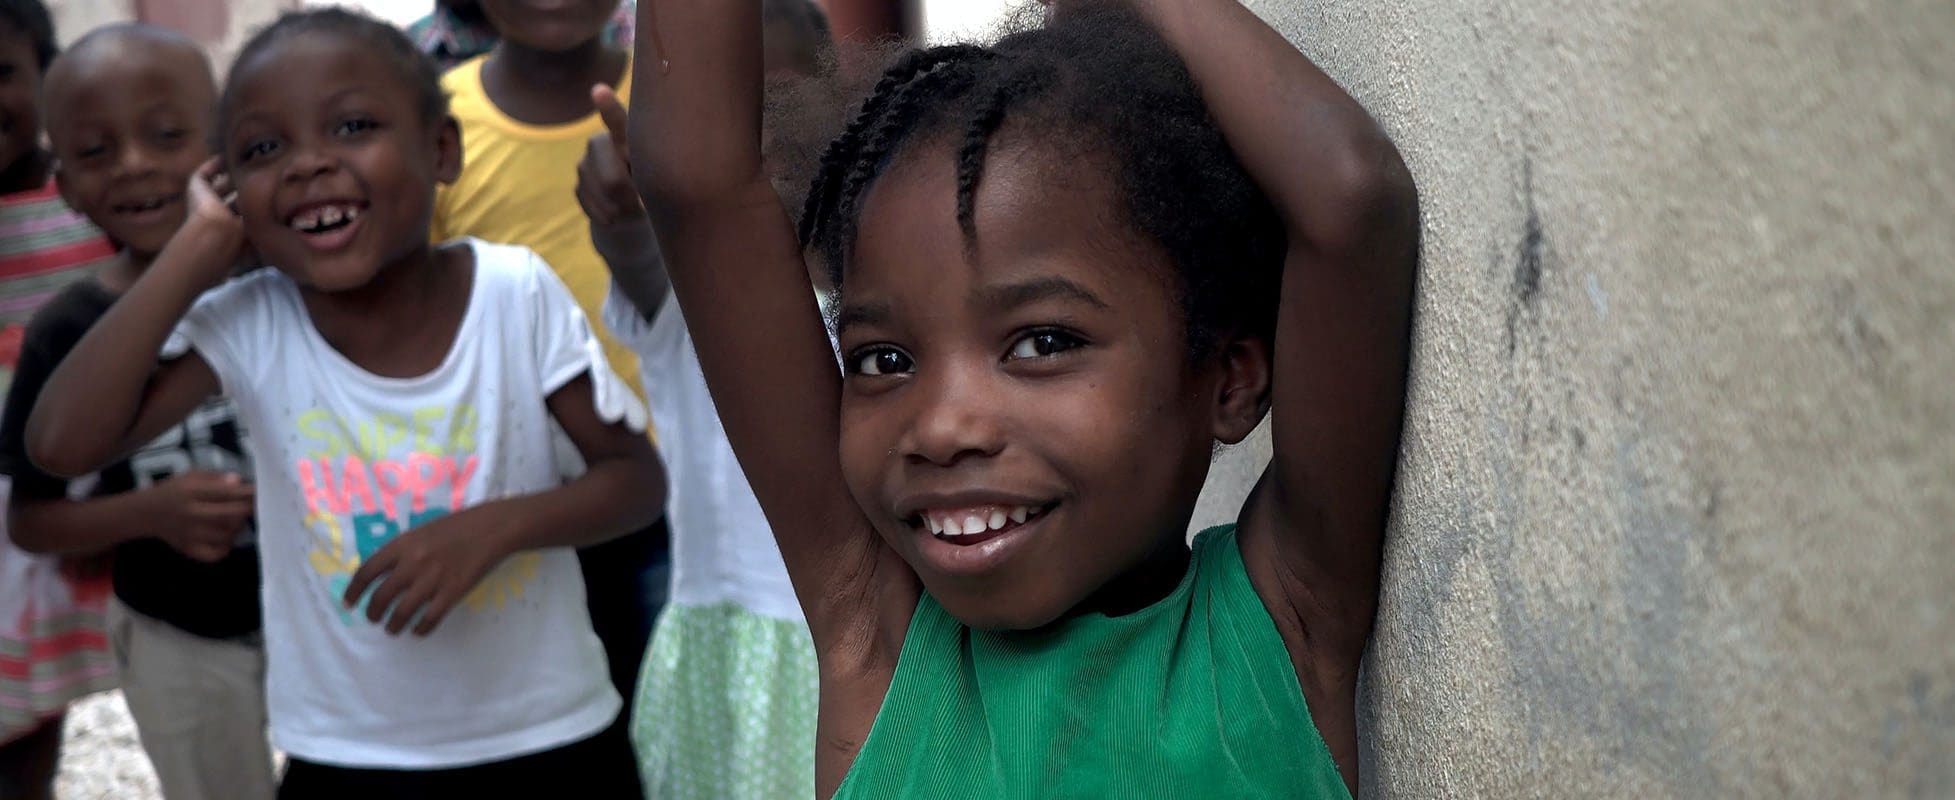 children of haiti after earthquake